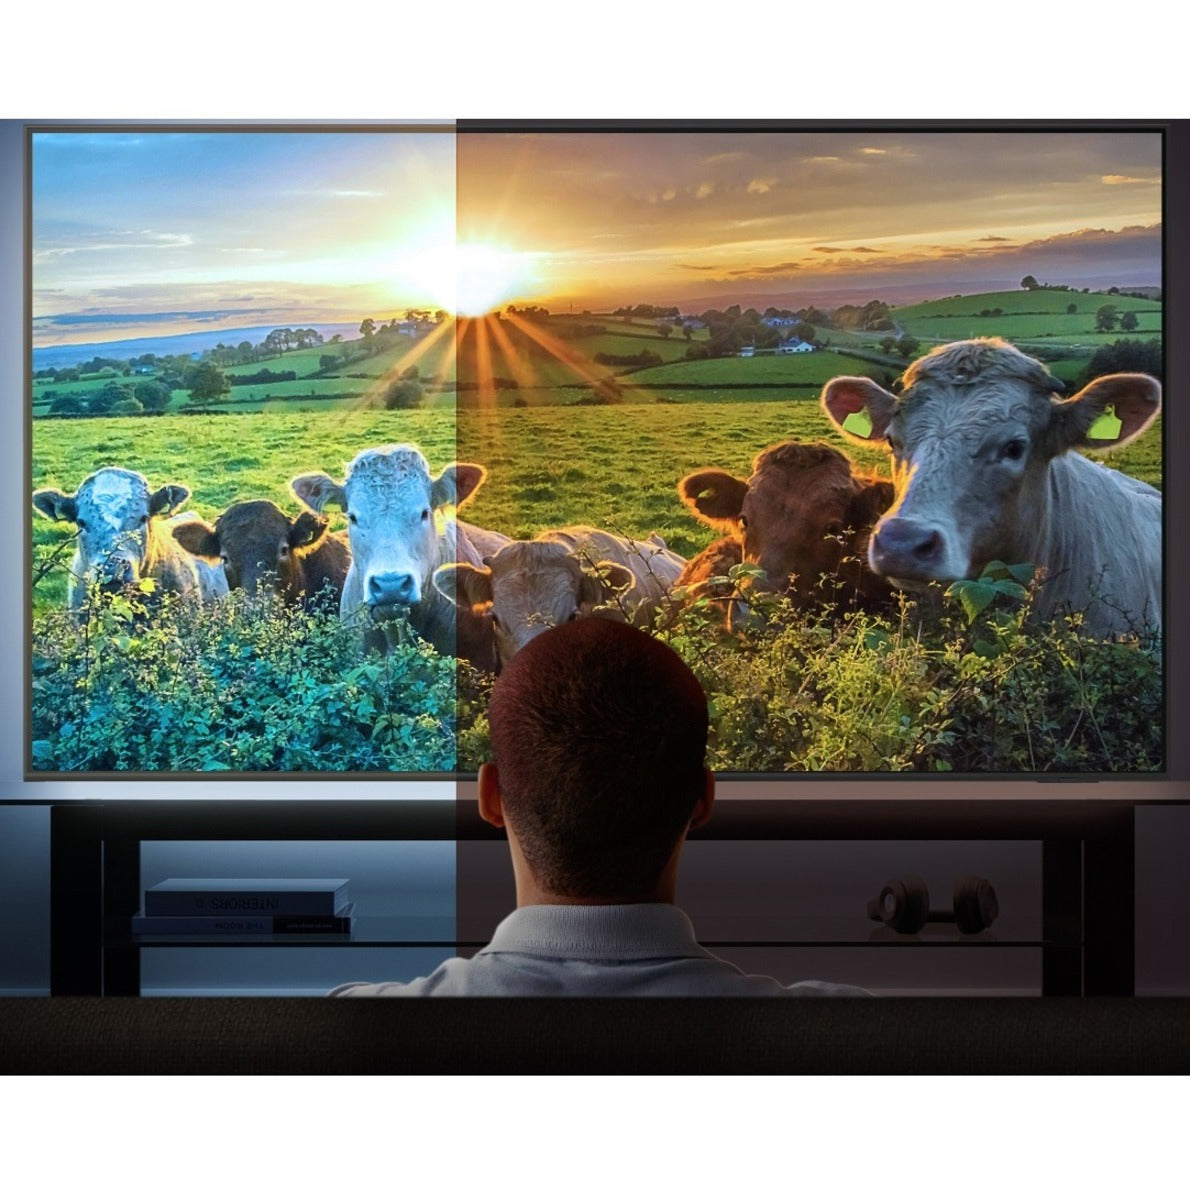 Samsung QN90B QN75QN90BAF 74.5" Smart LED-LCD TV - 4K UHDTV - Titan Black Sand Black